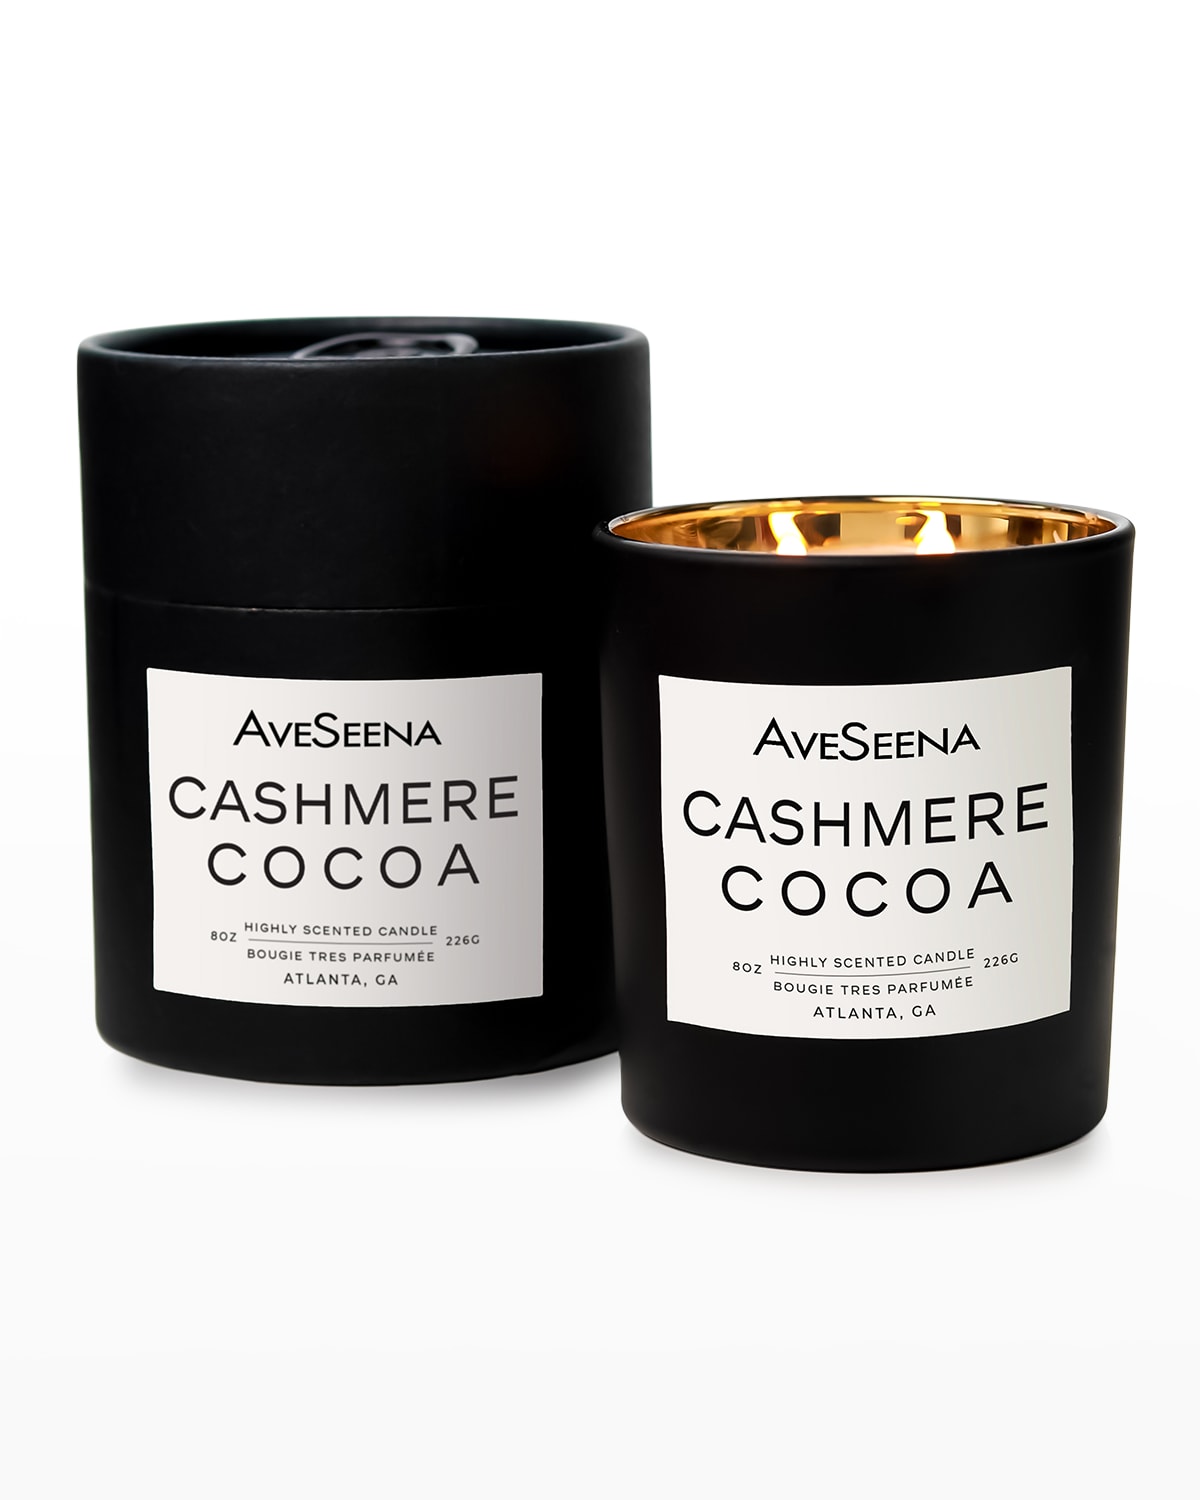 Cashmere Cocoa Candle, 8 oz.